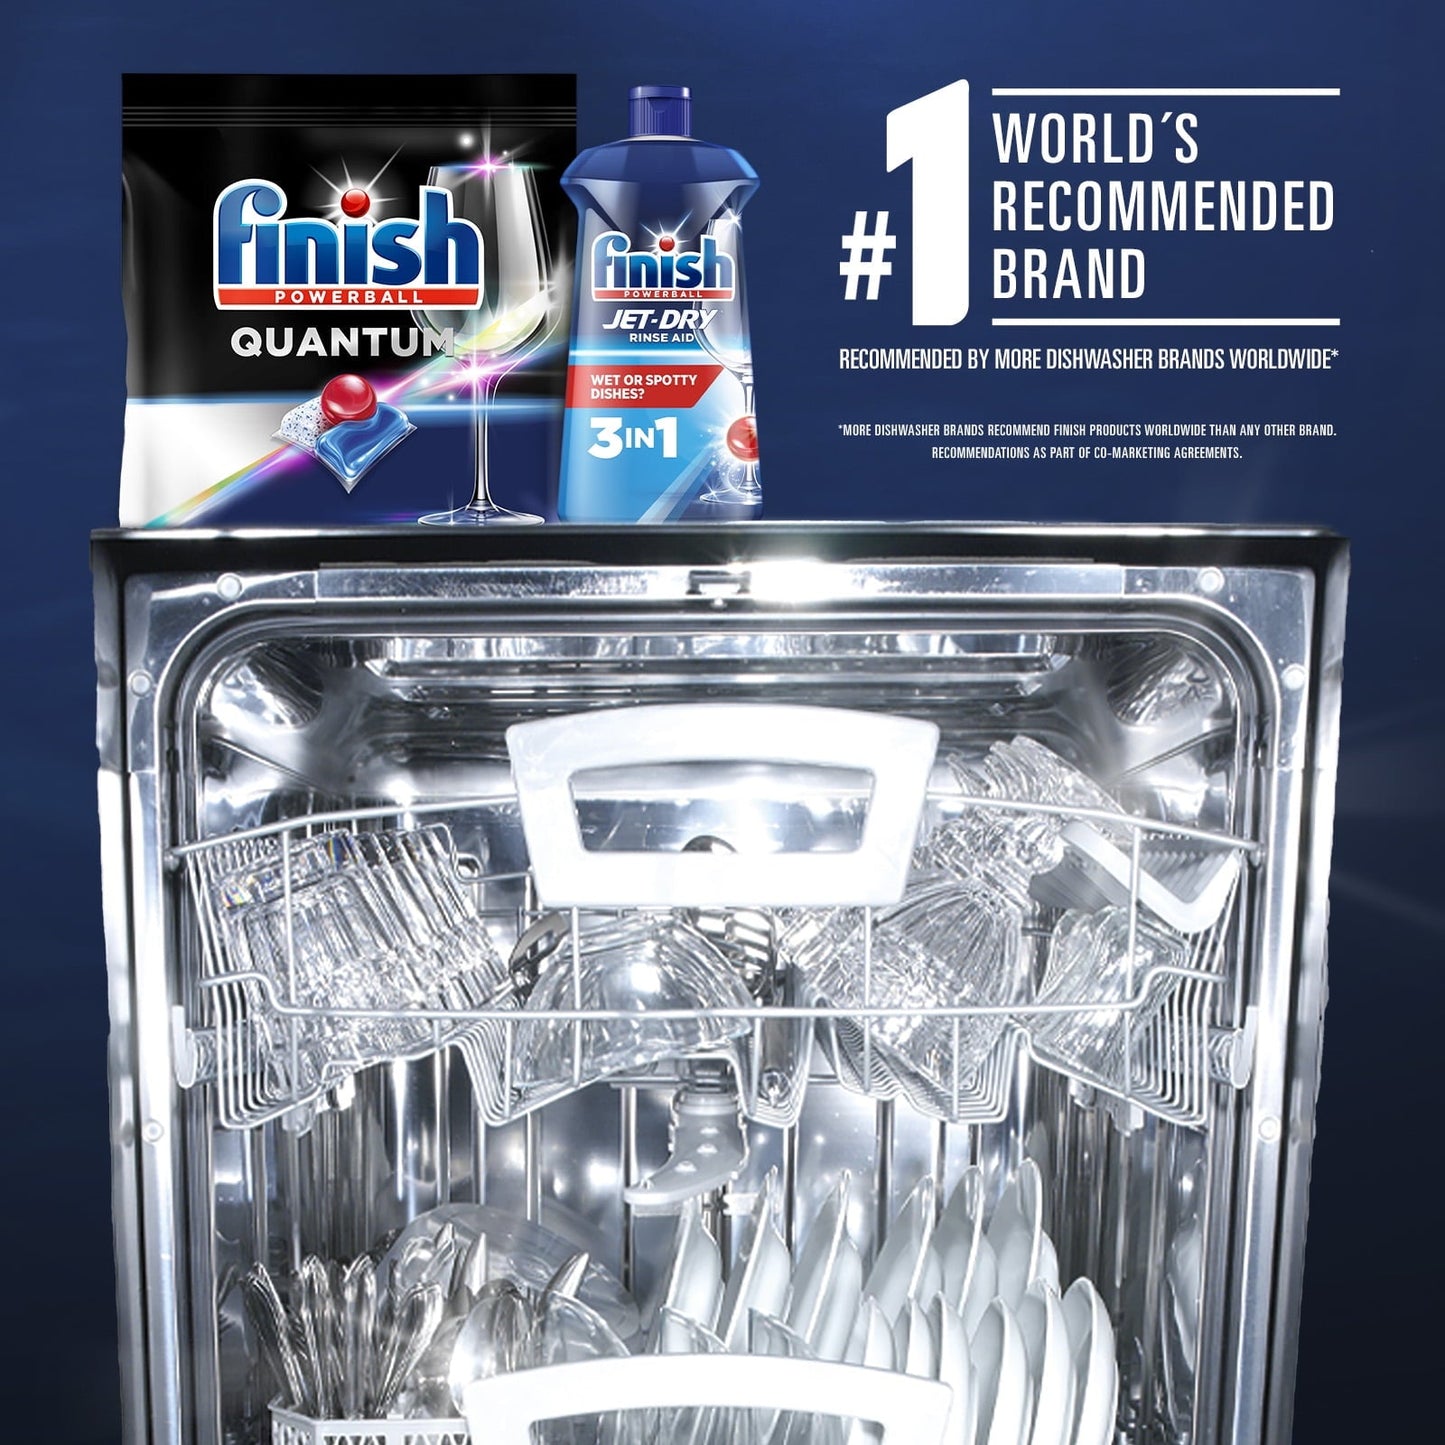 Finish Quantum Dishwasher Detergent- 15 Count - Dishwashing Tablets - Dish Tabs